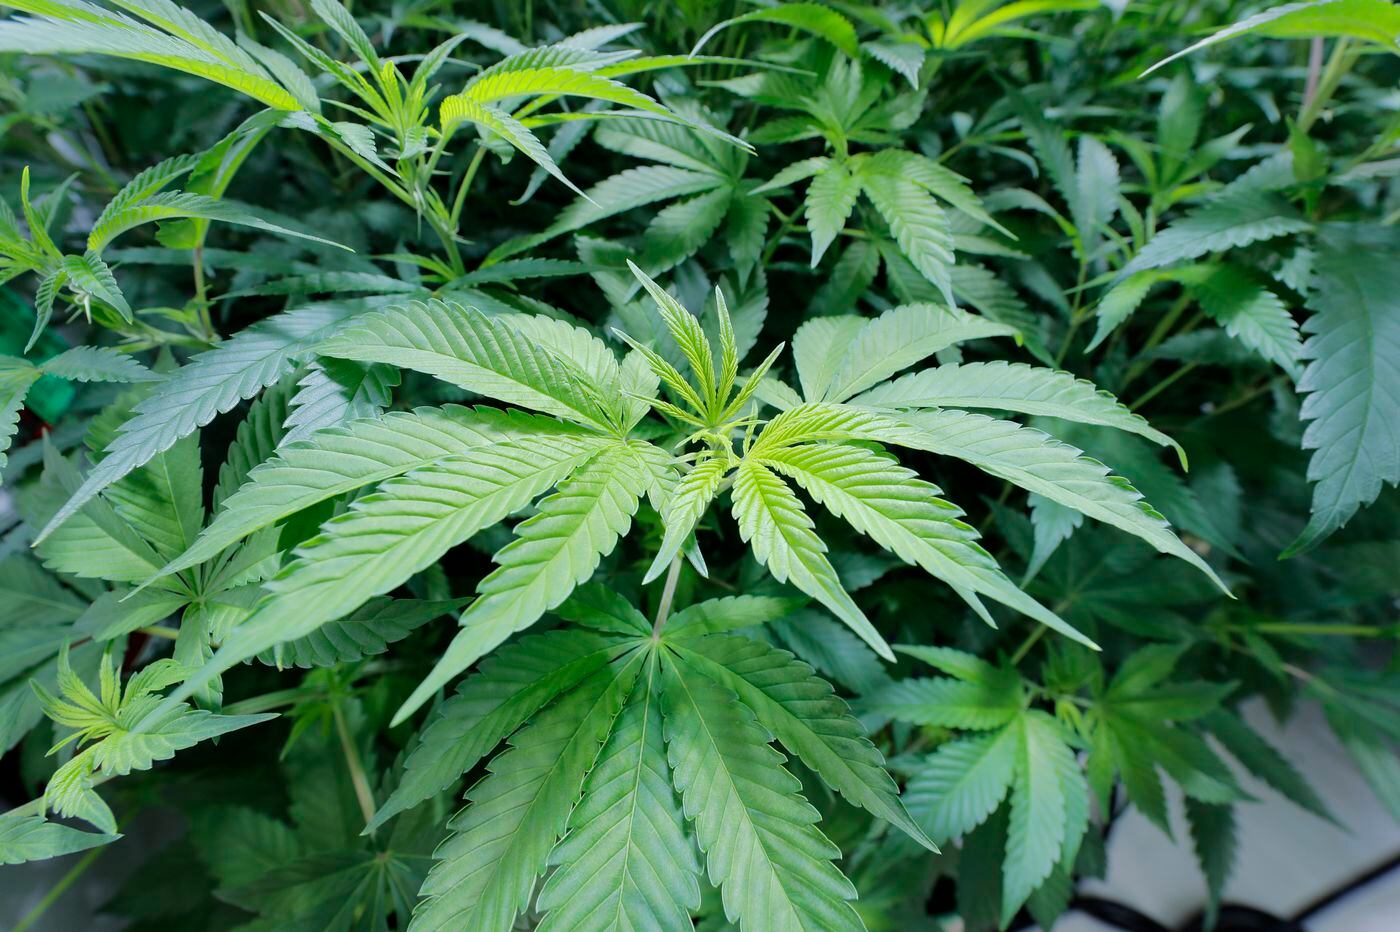 Legalizing recreational marijuana would make Pennsylvania richer ...